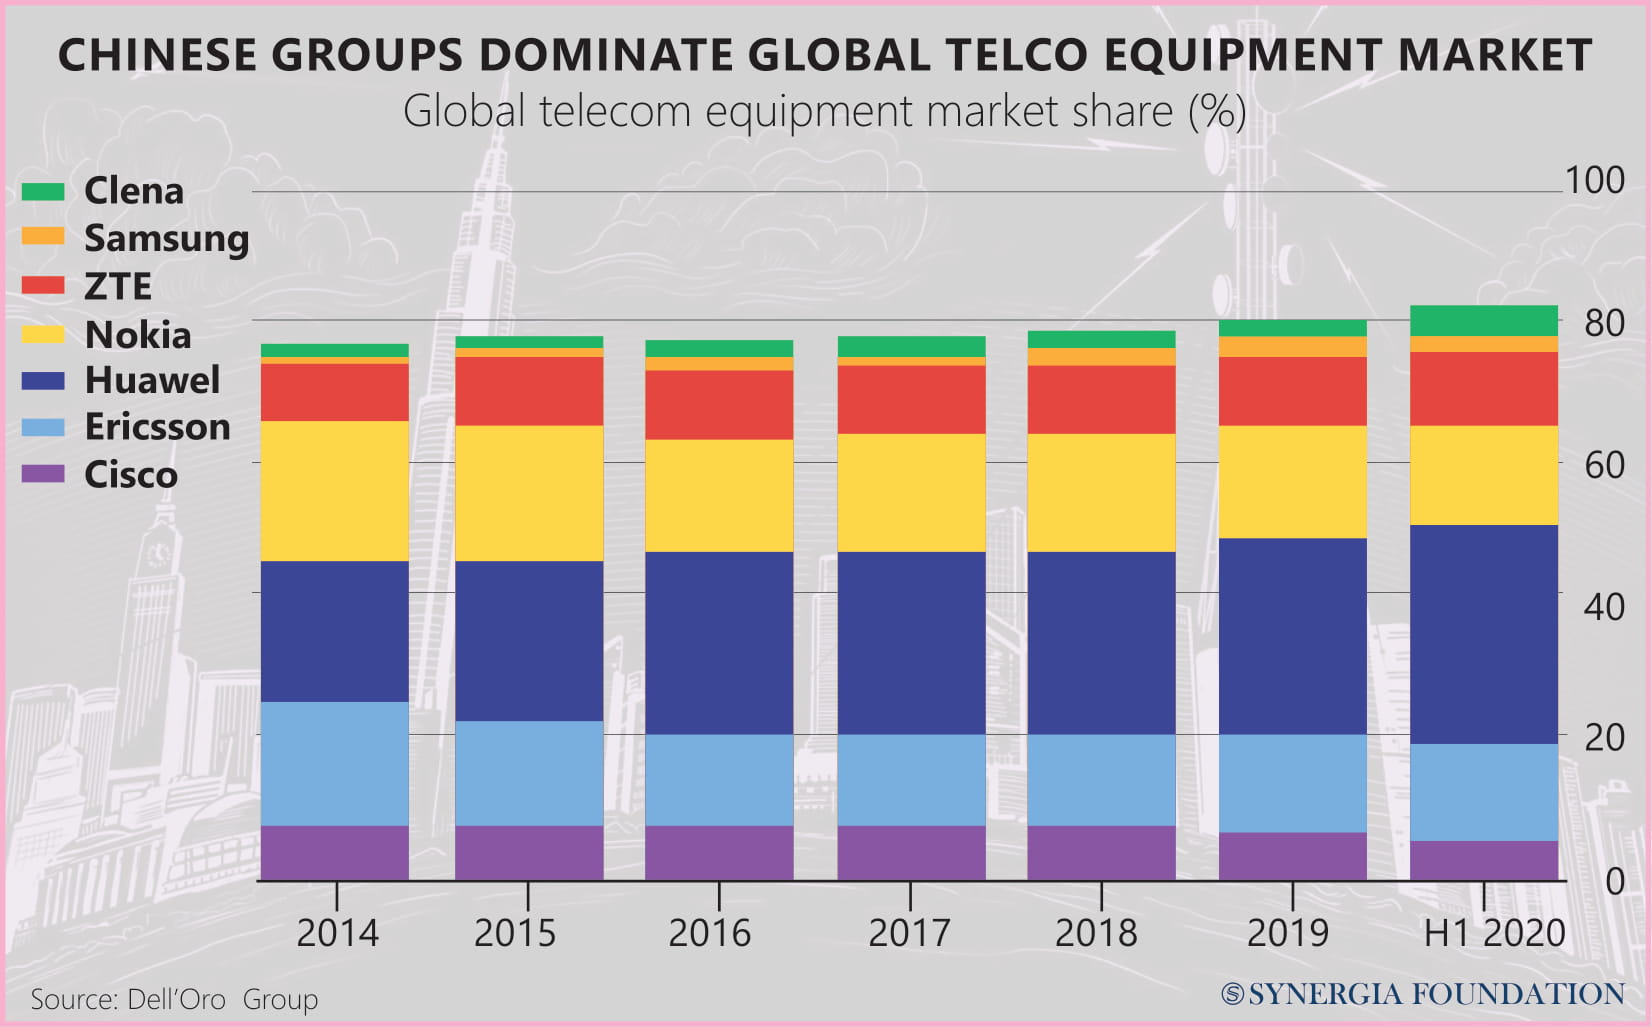 Global telecom equipment market share